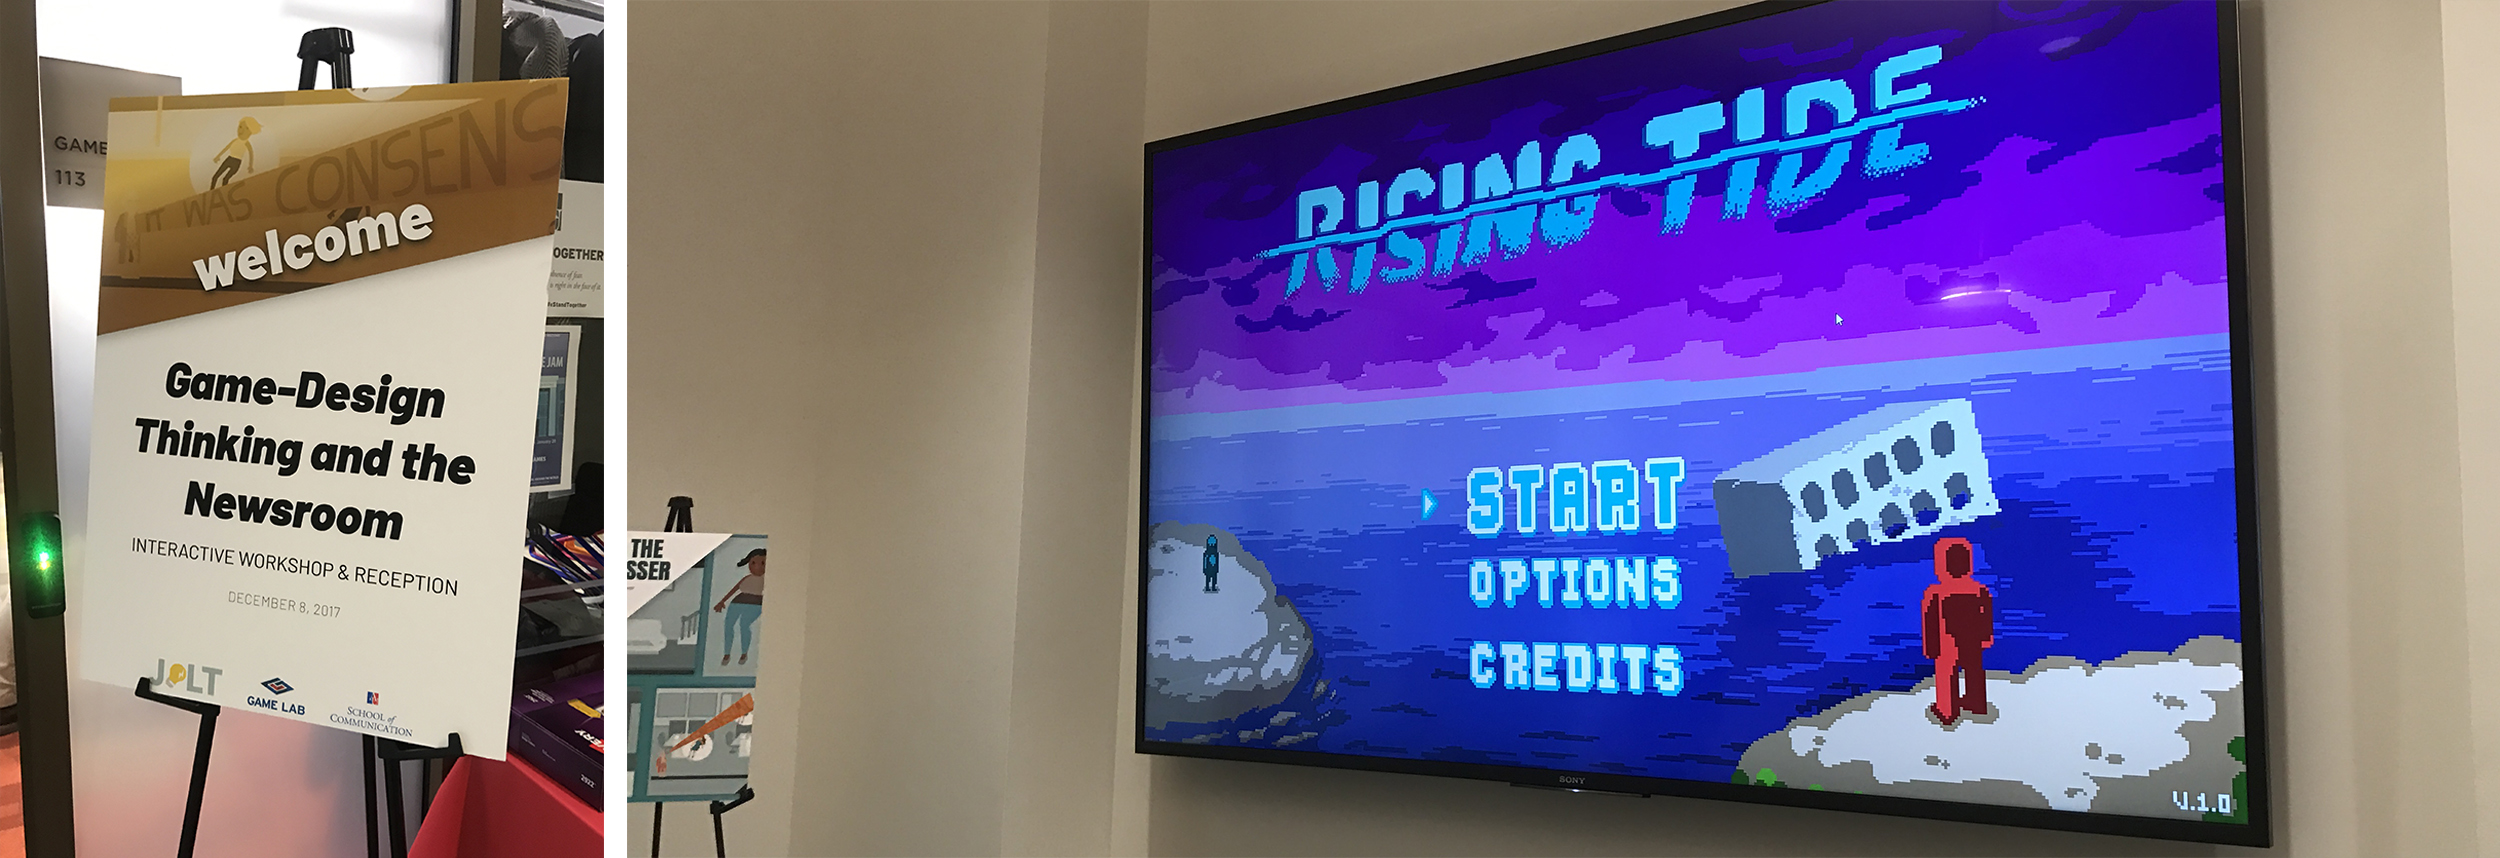 Rising Tide Final Showcase game arcade image